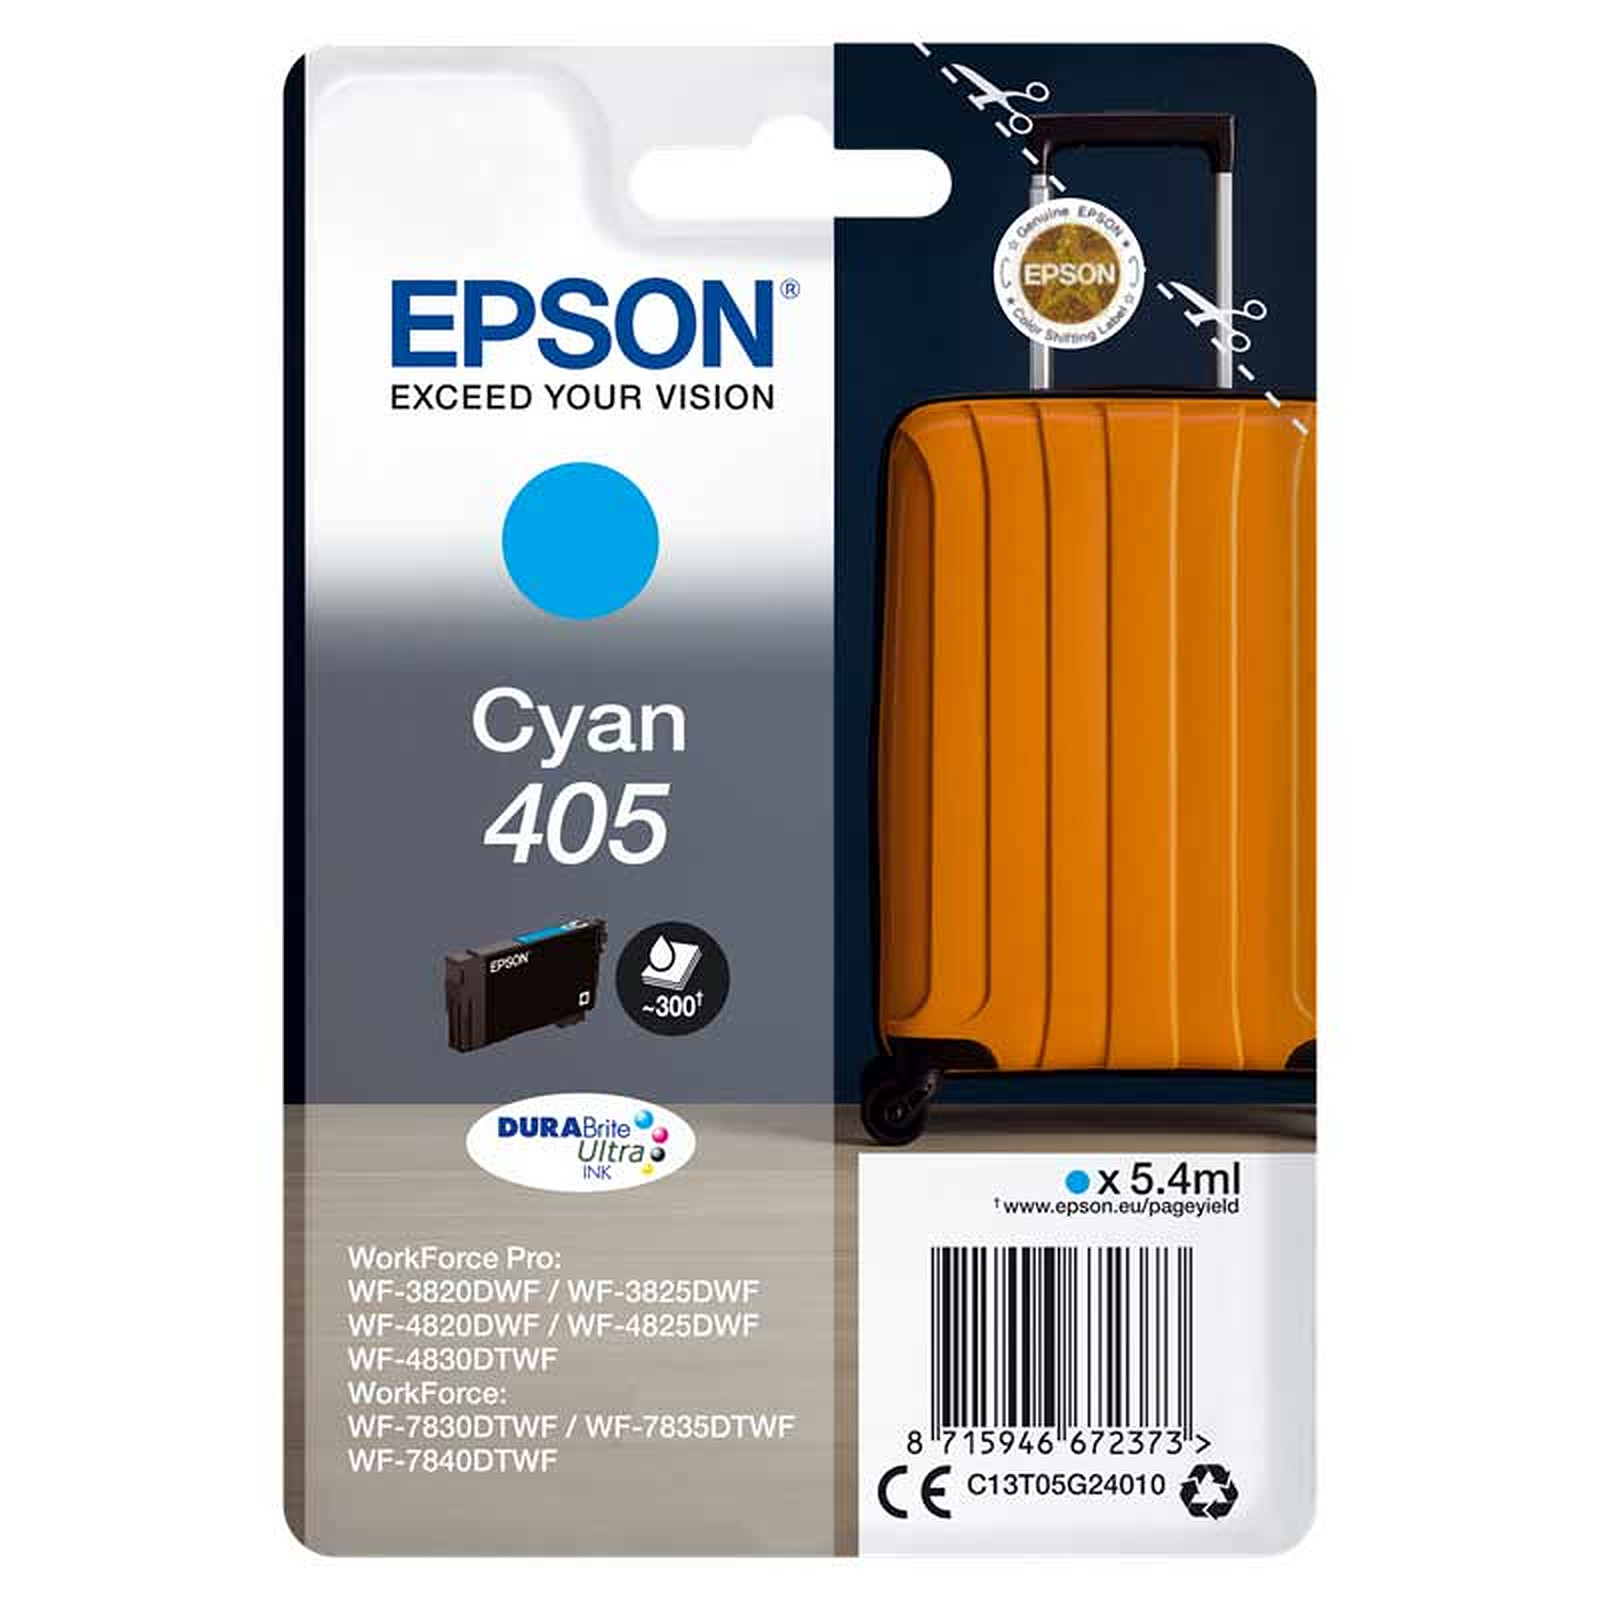 Epson Valise 405 Cyan - Cartouche imprimante Epson